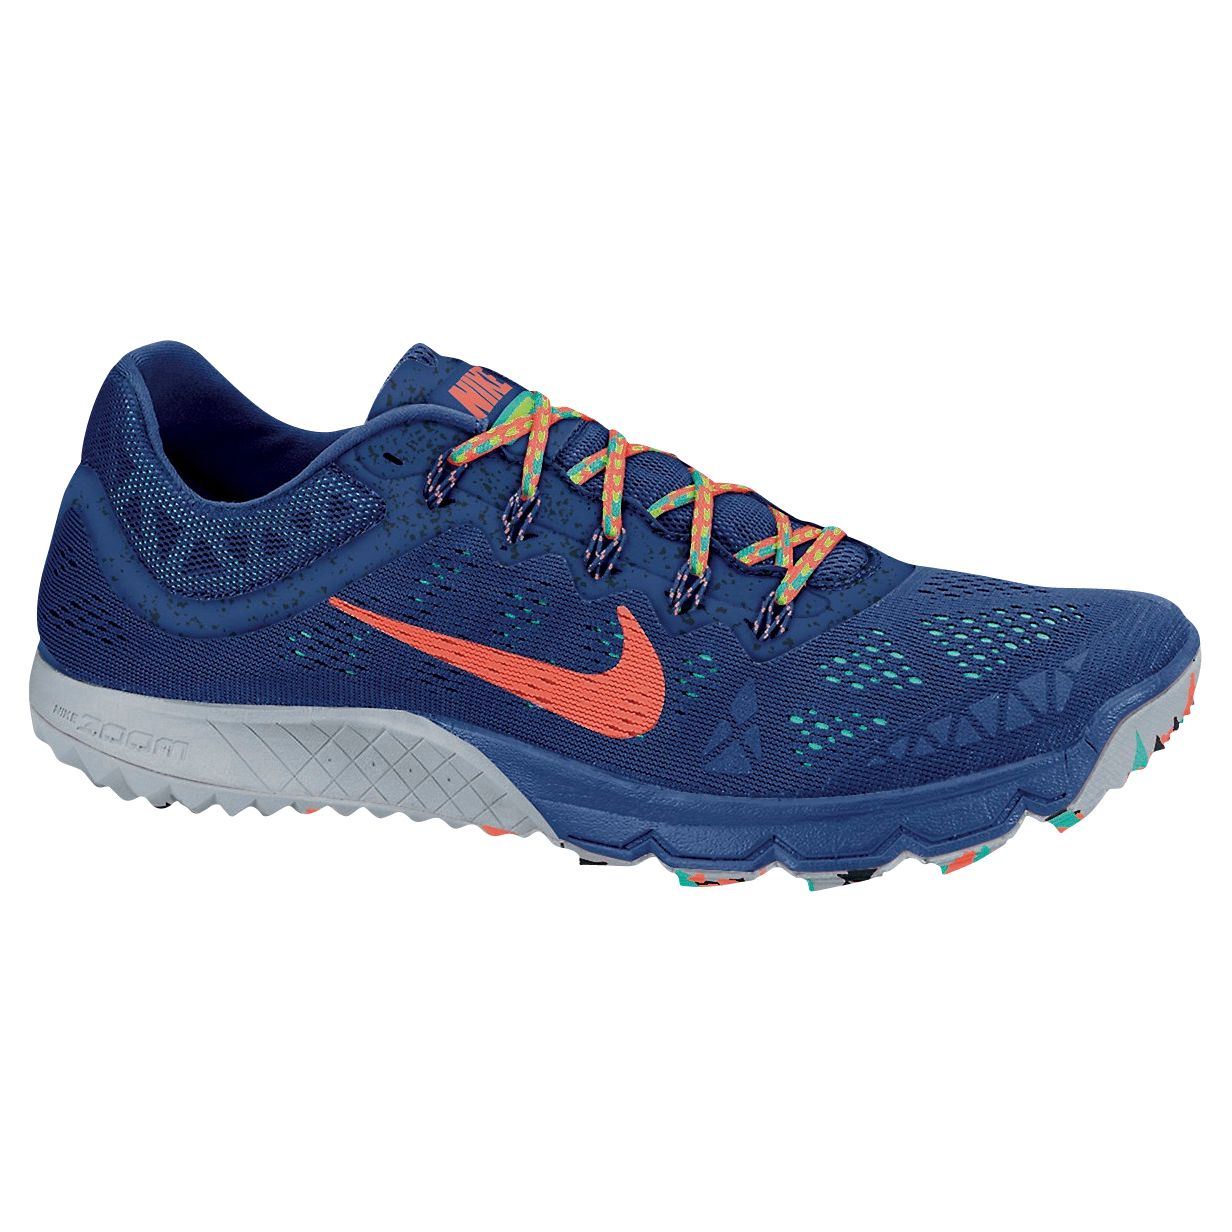 Nike Men's Zoom Terra Kiger Trail Running Shoes, Blue